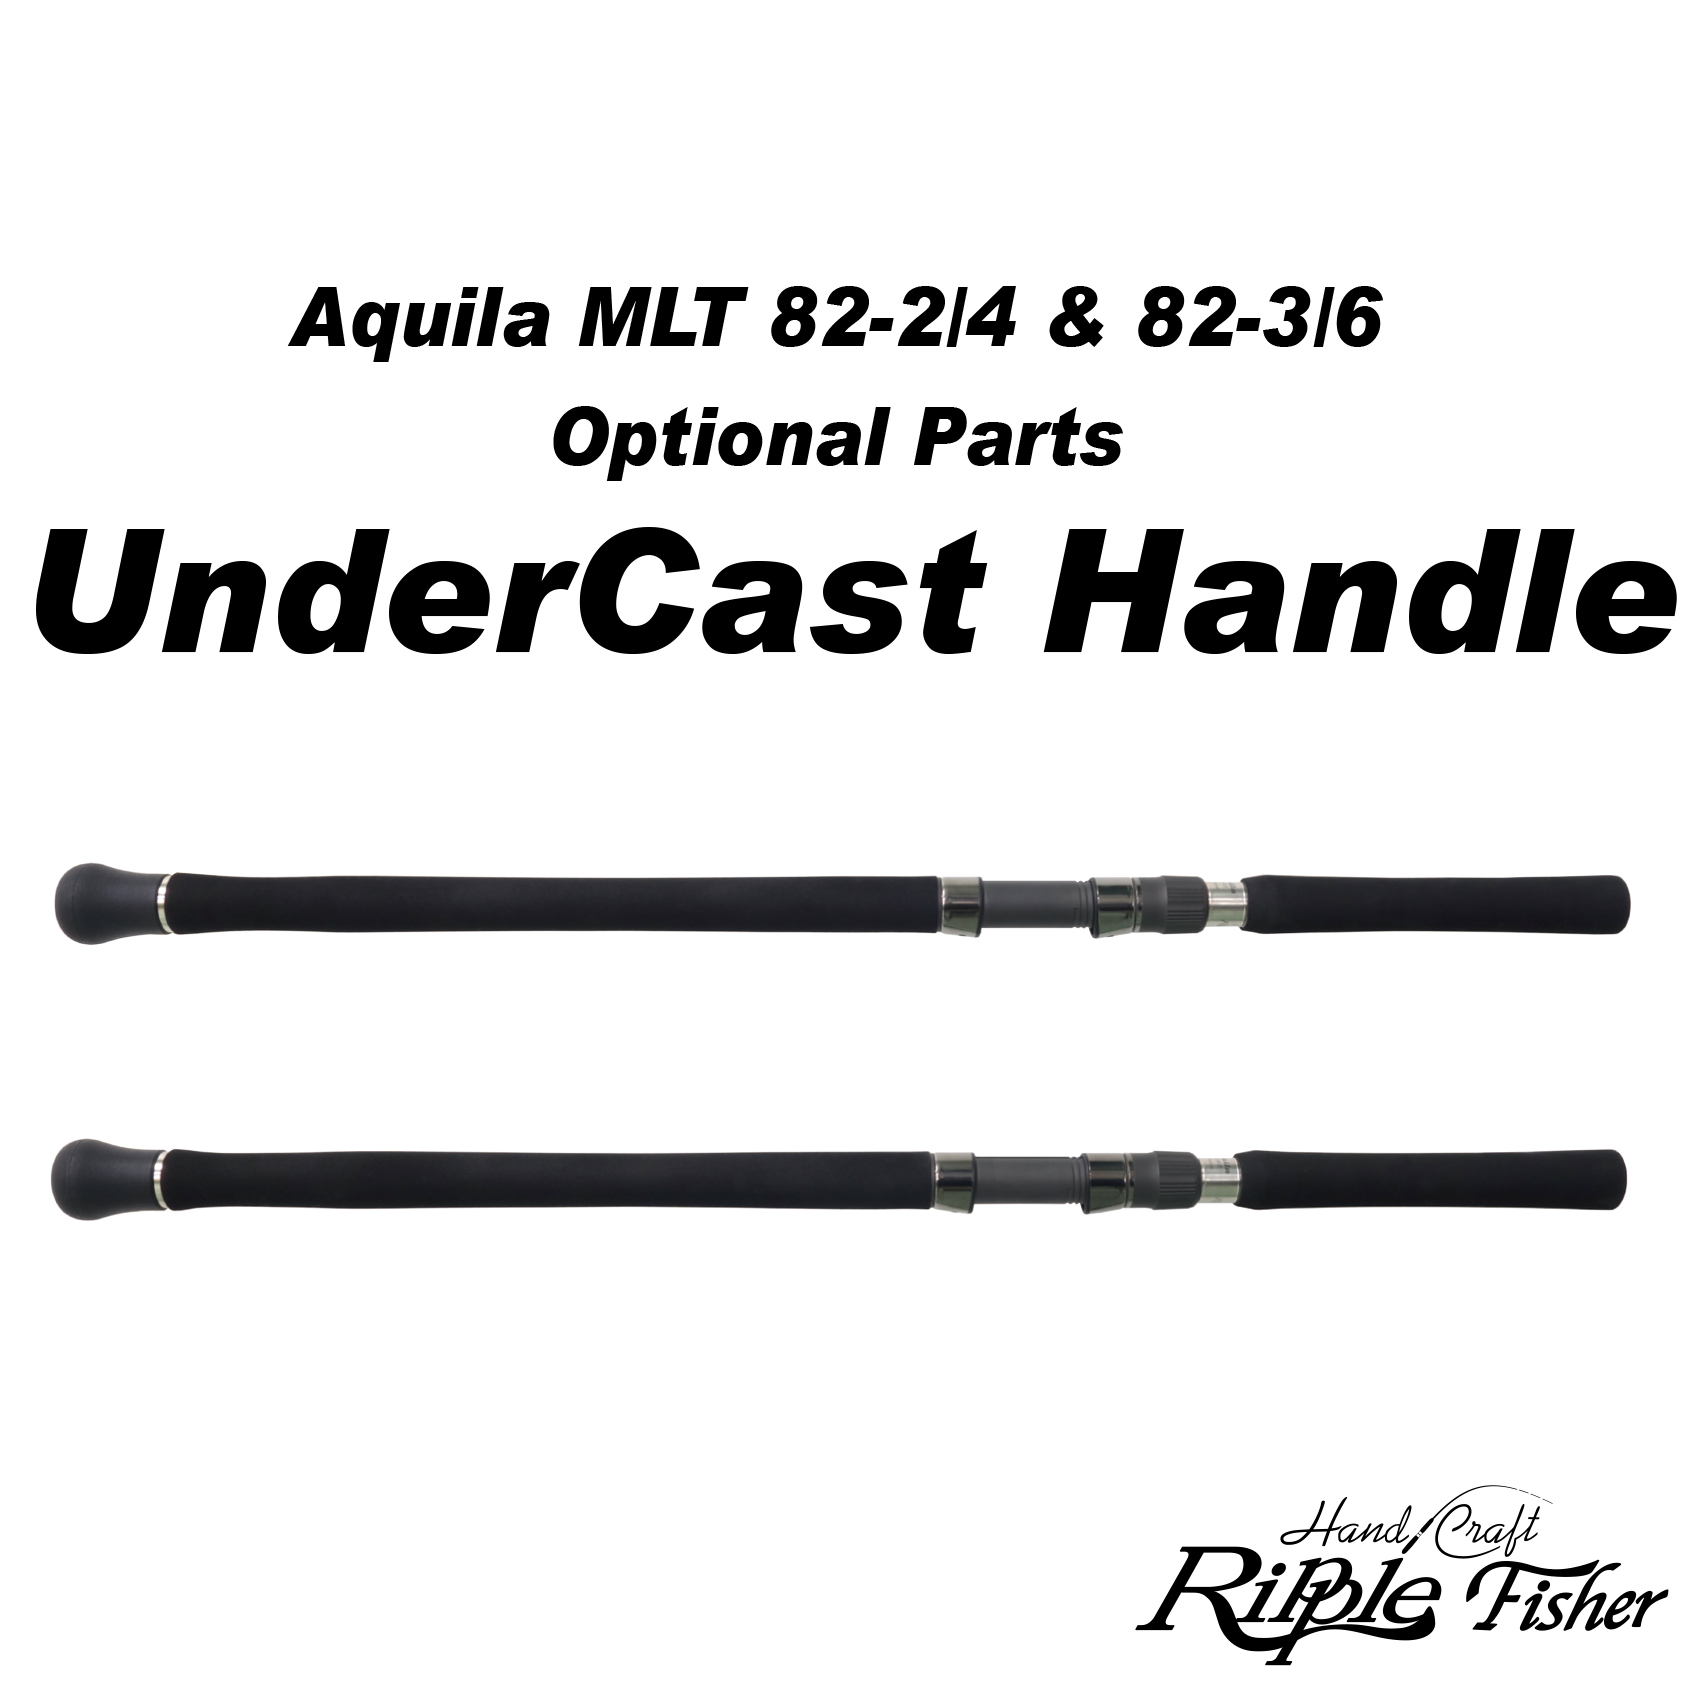 UnderCast Handle Aquila MLT Optional Parts | リップルフィッシャー